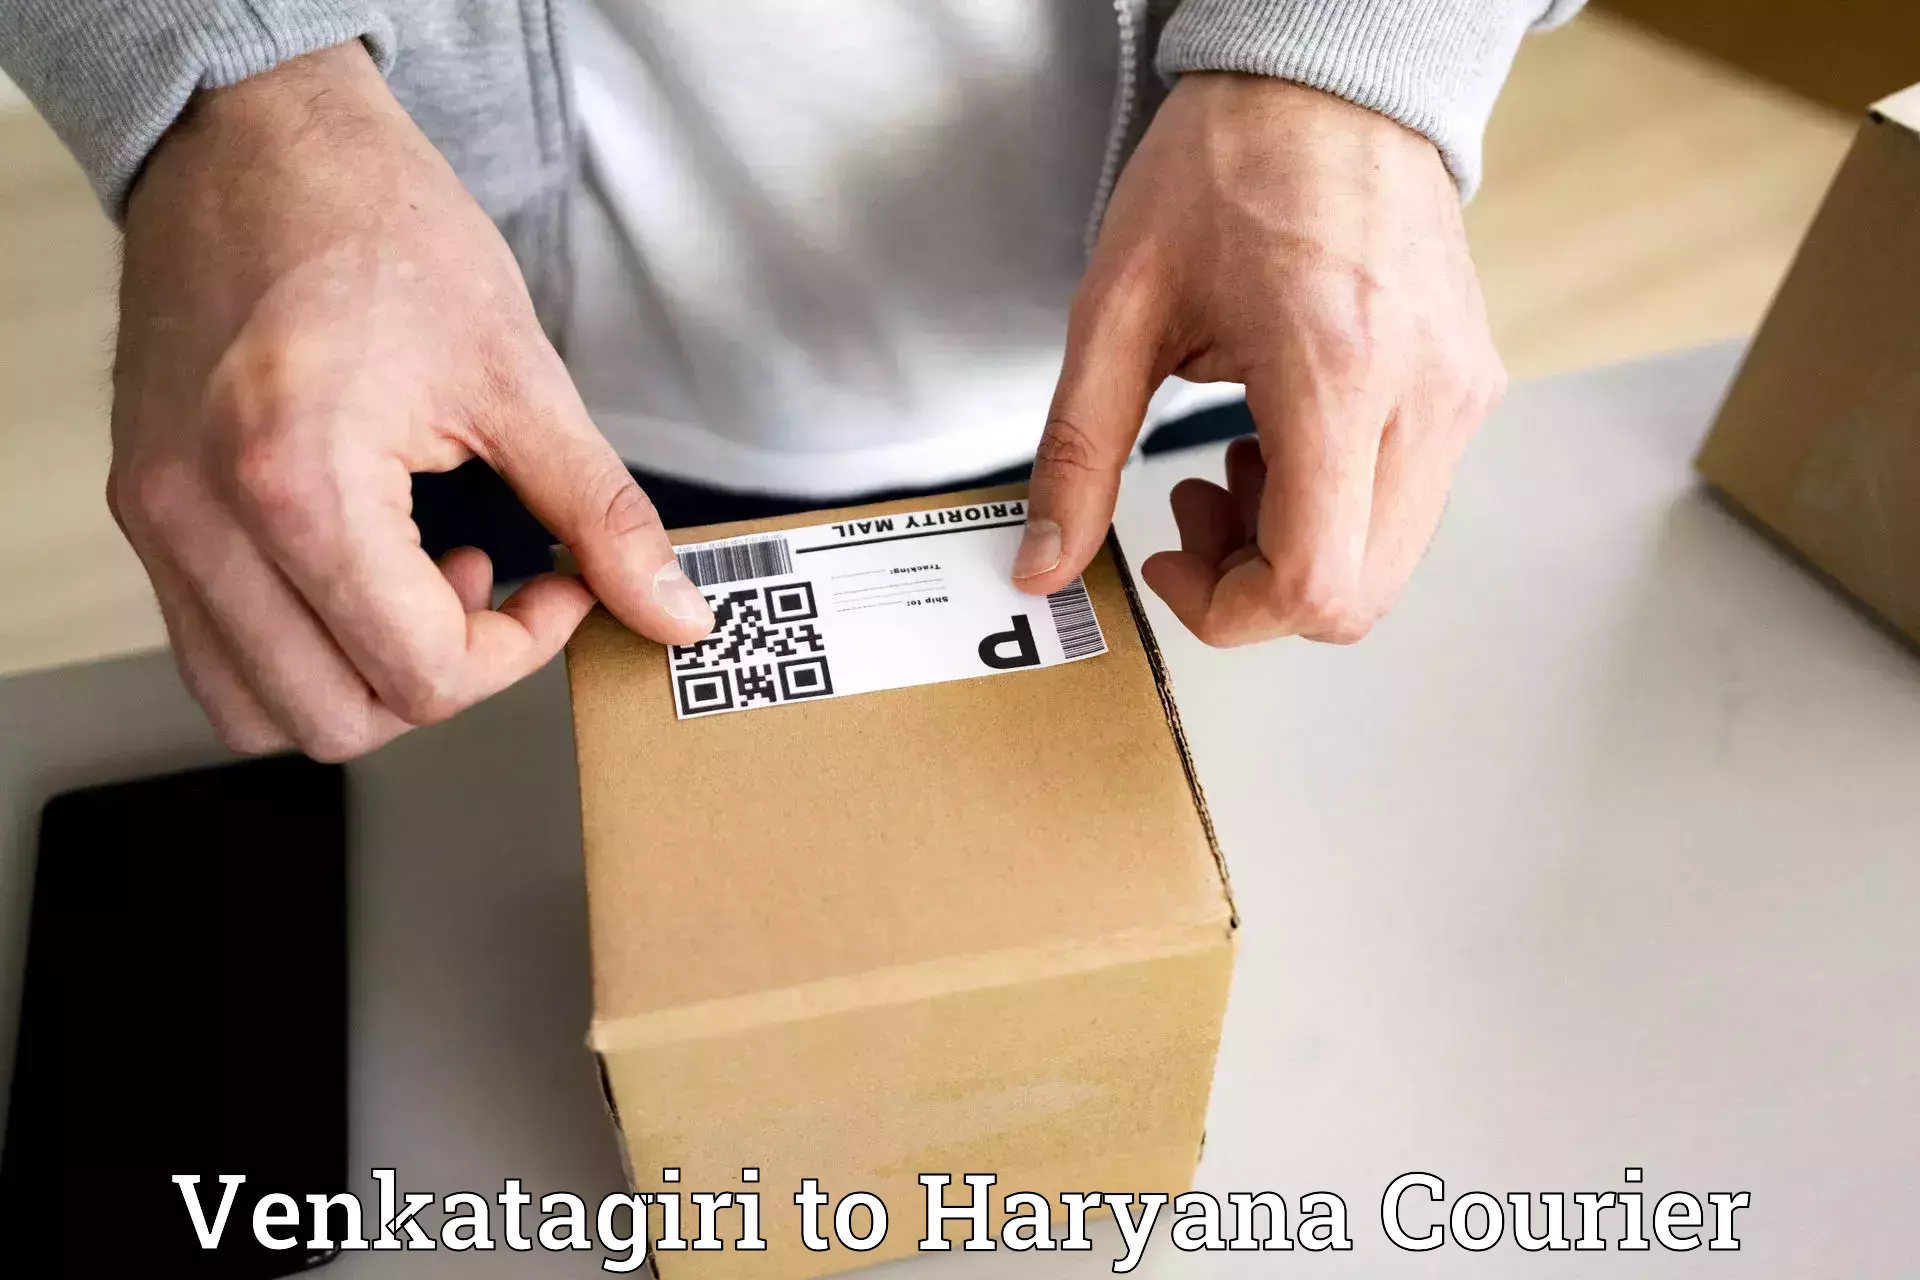 On-call courier service Venkatagiri to Chirya